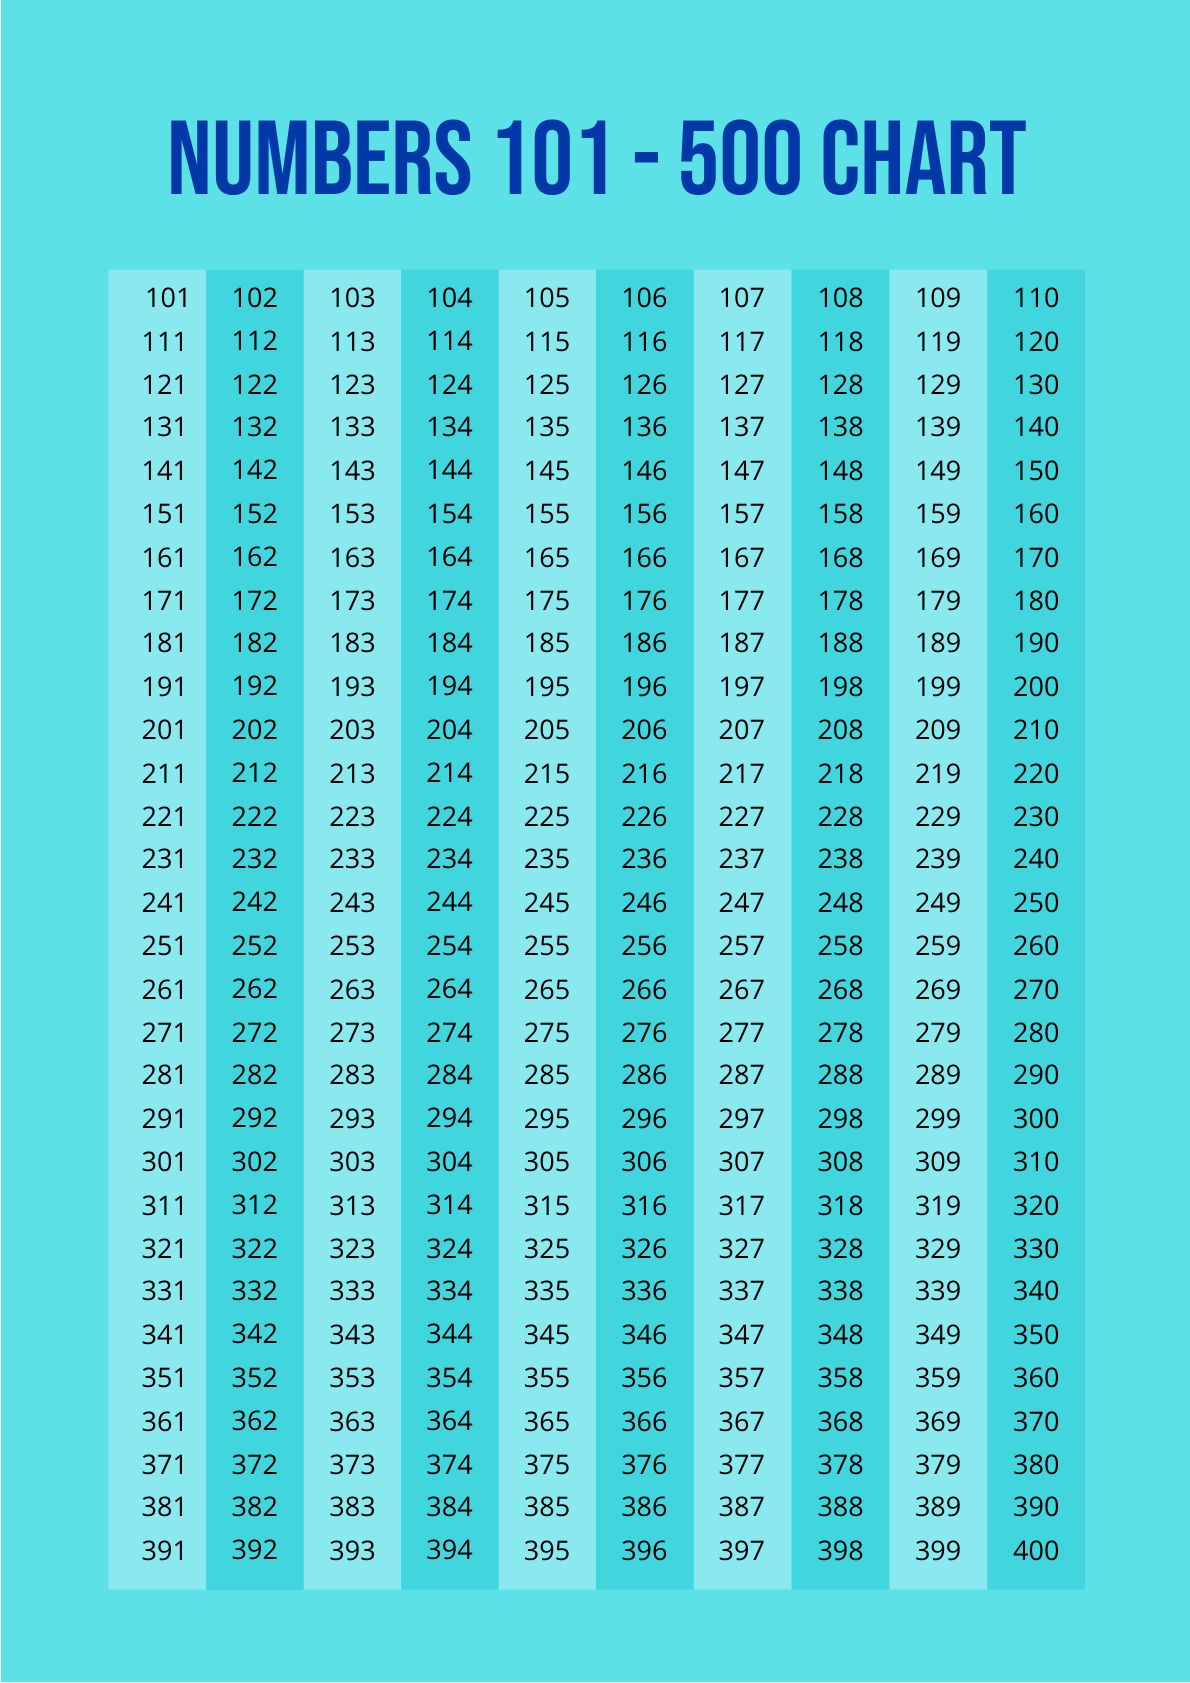 Numbers 101-500 Chart in PDF, Illustrator